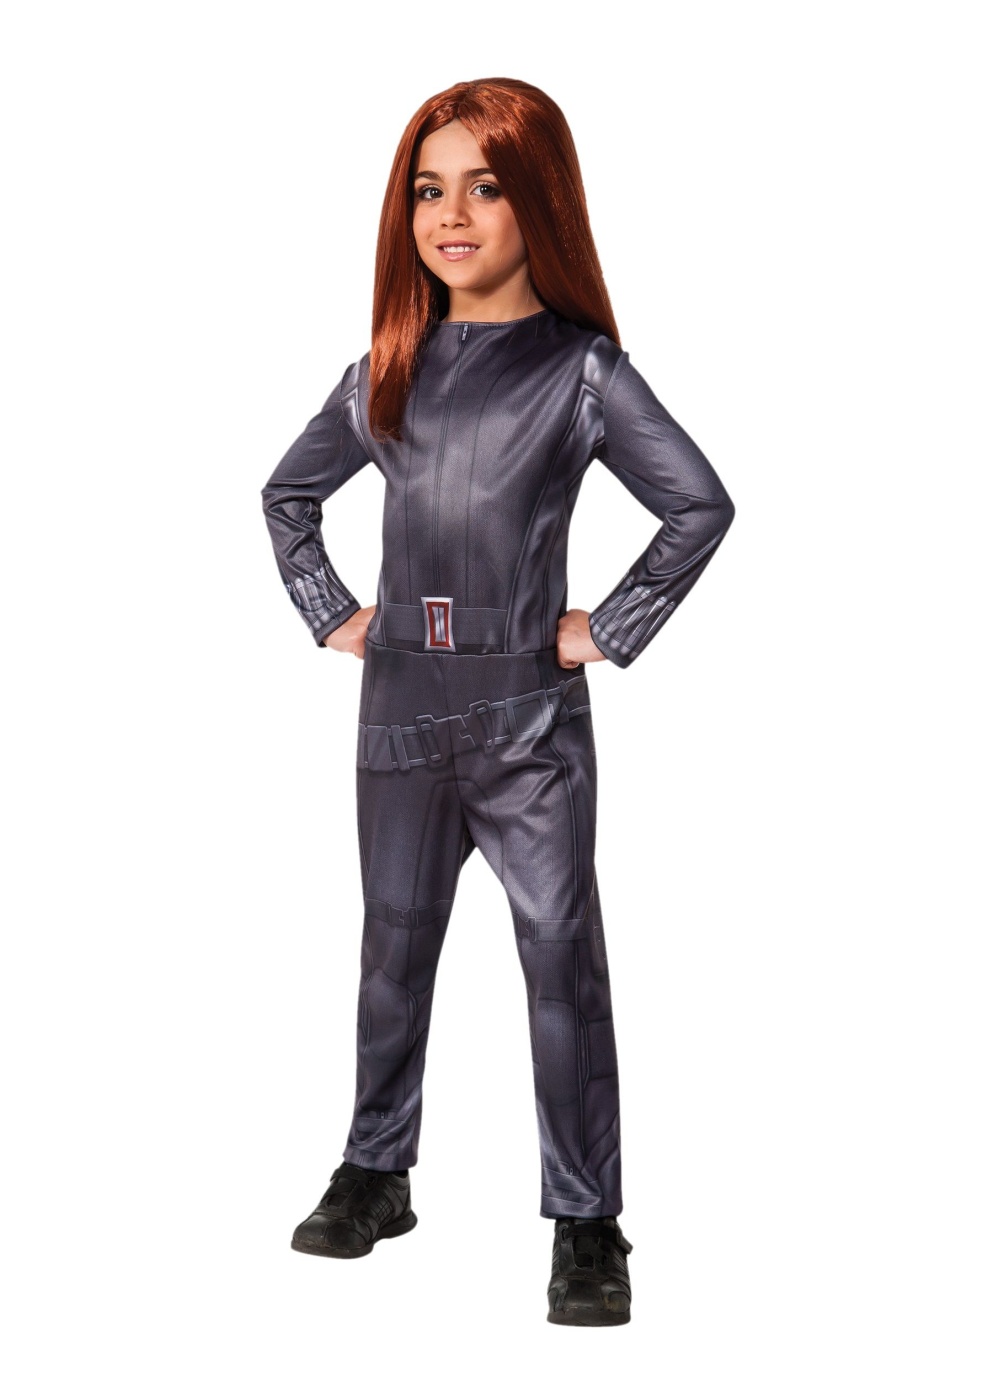  Girls Black Widow Costume